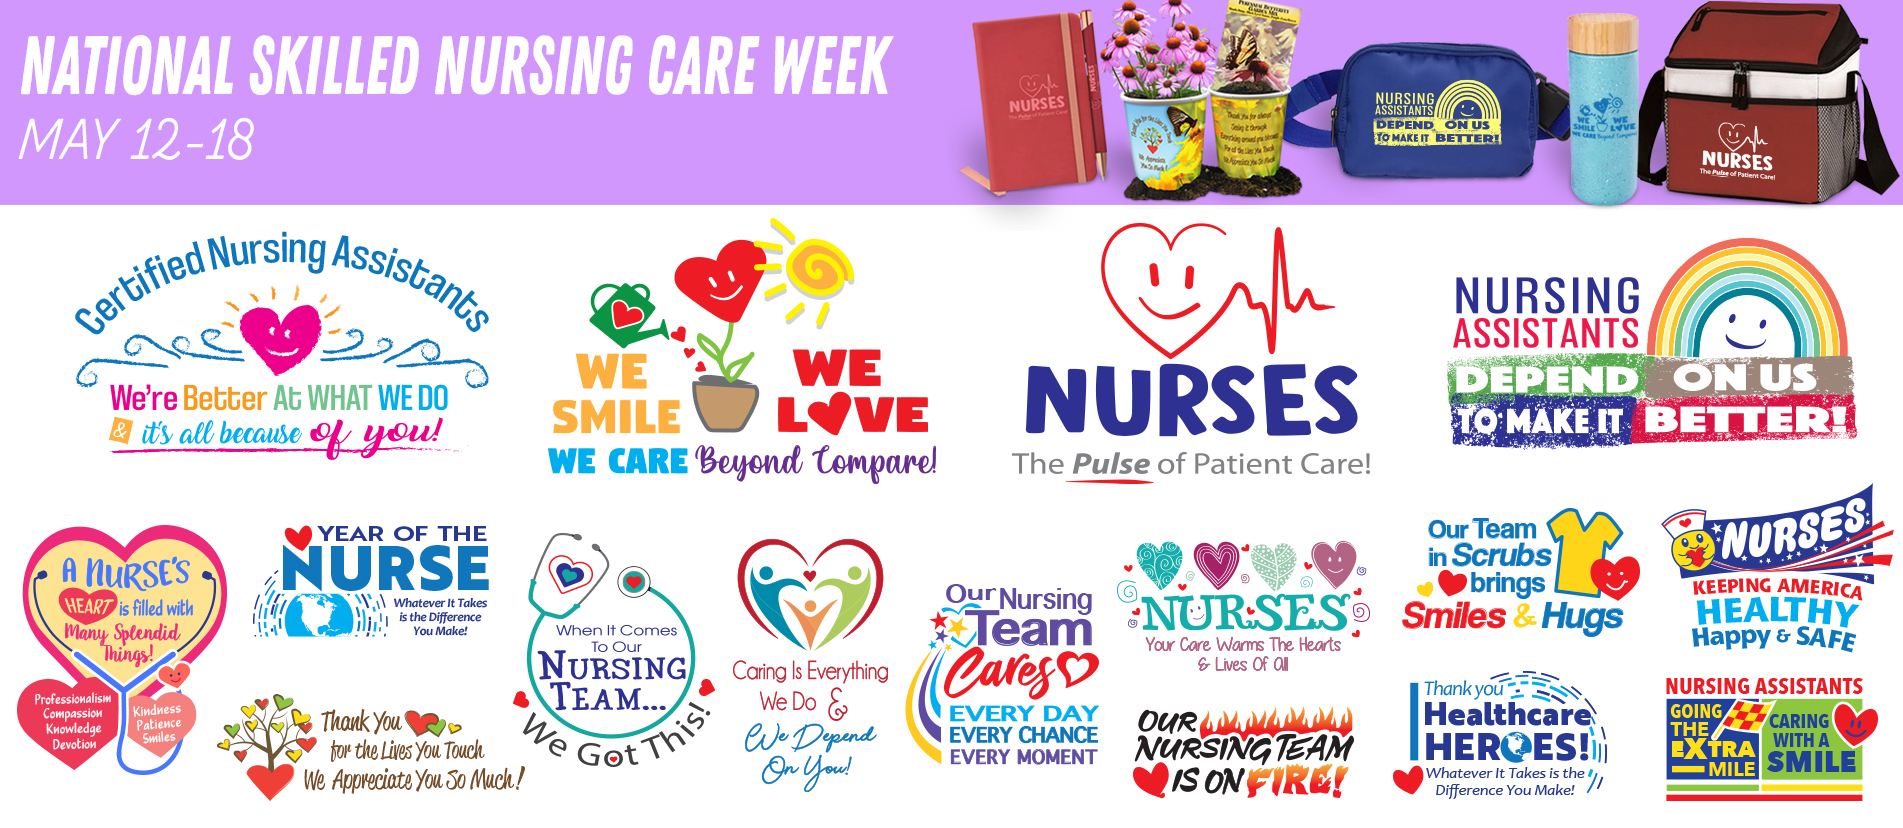 National Skilled Nursing Care Week 